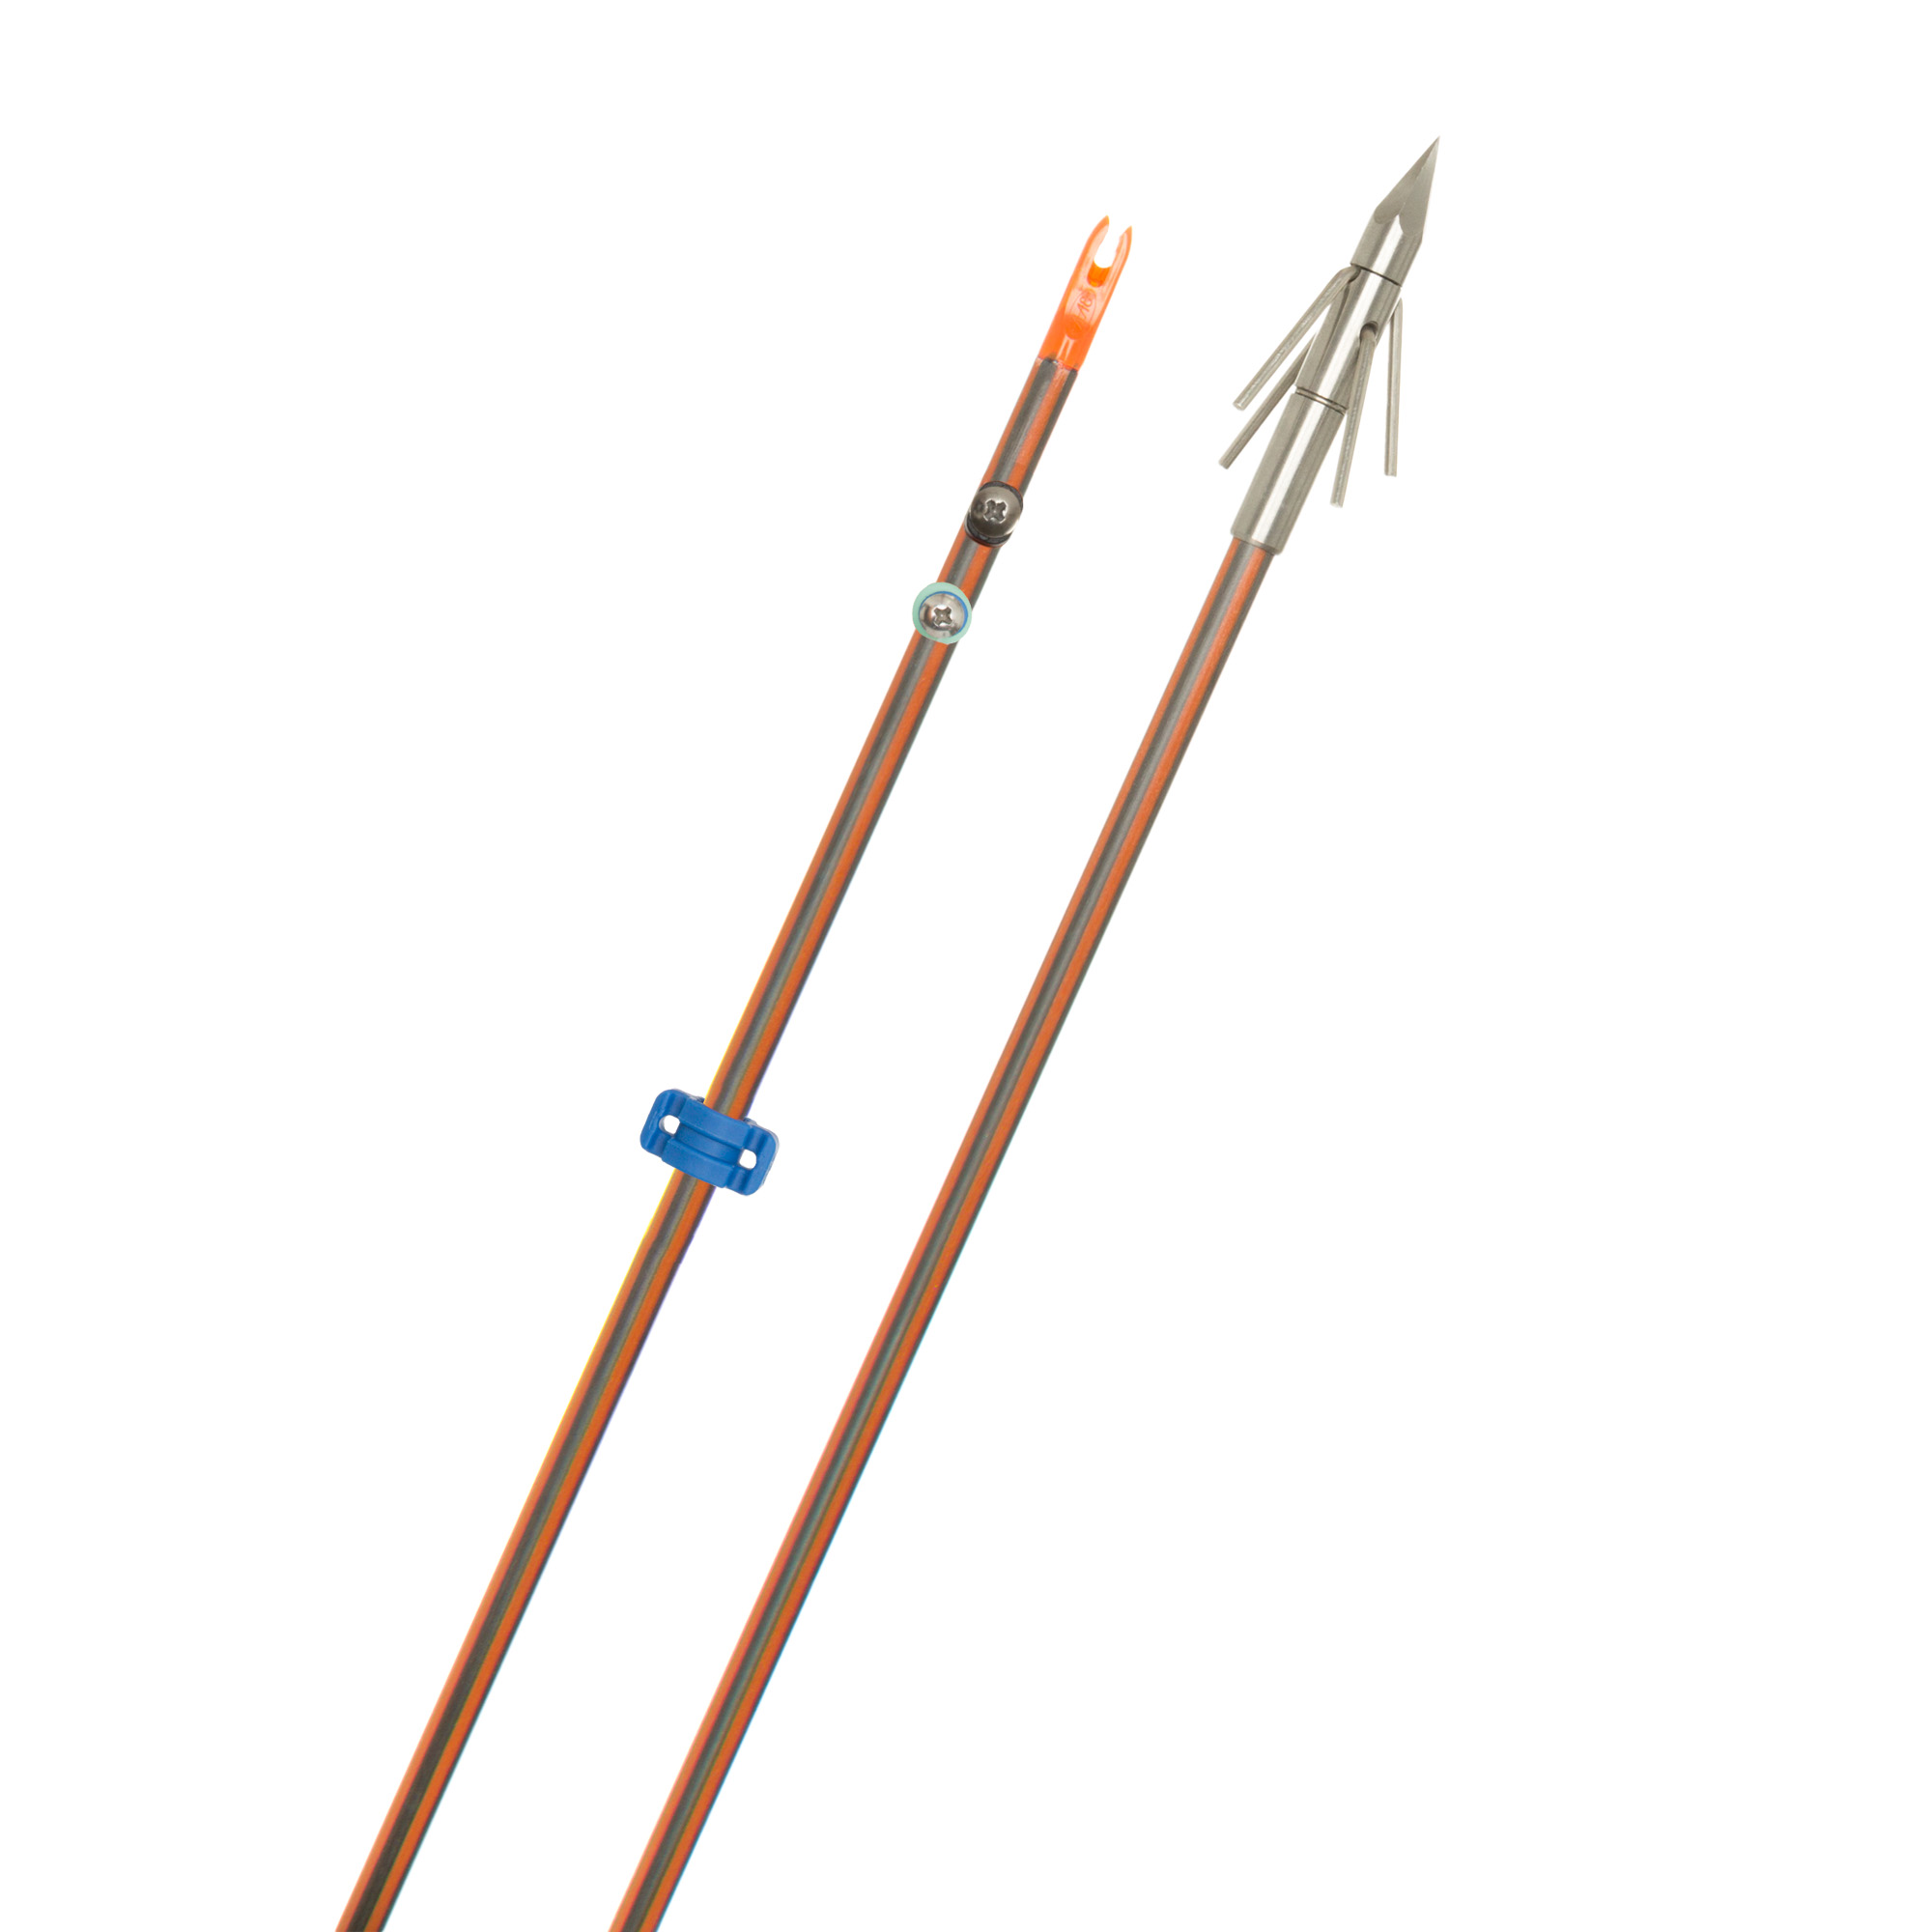 Hydro-Carbon IL Bowfishing Arrow w/Big Head Xtreme Point